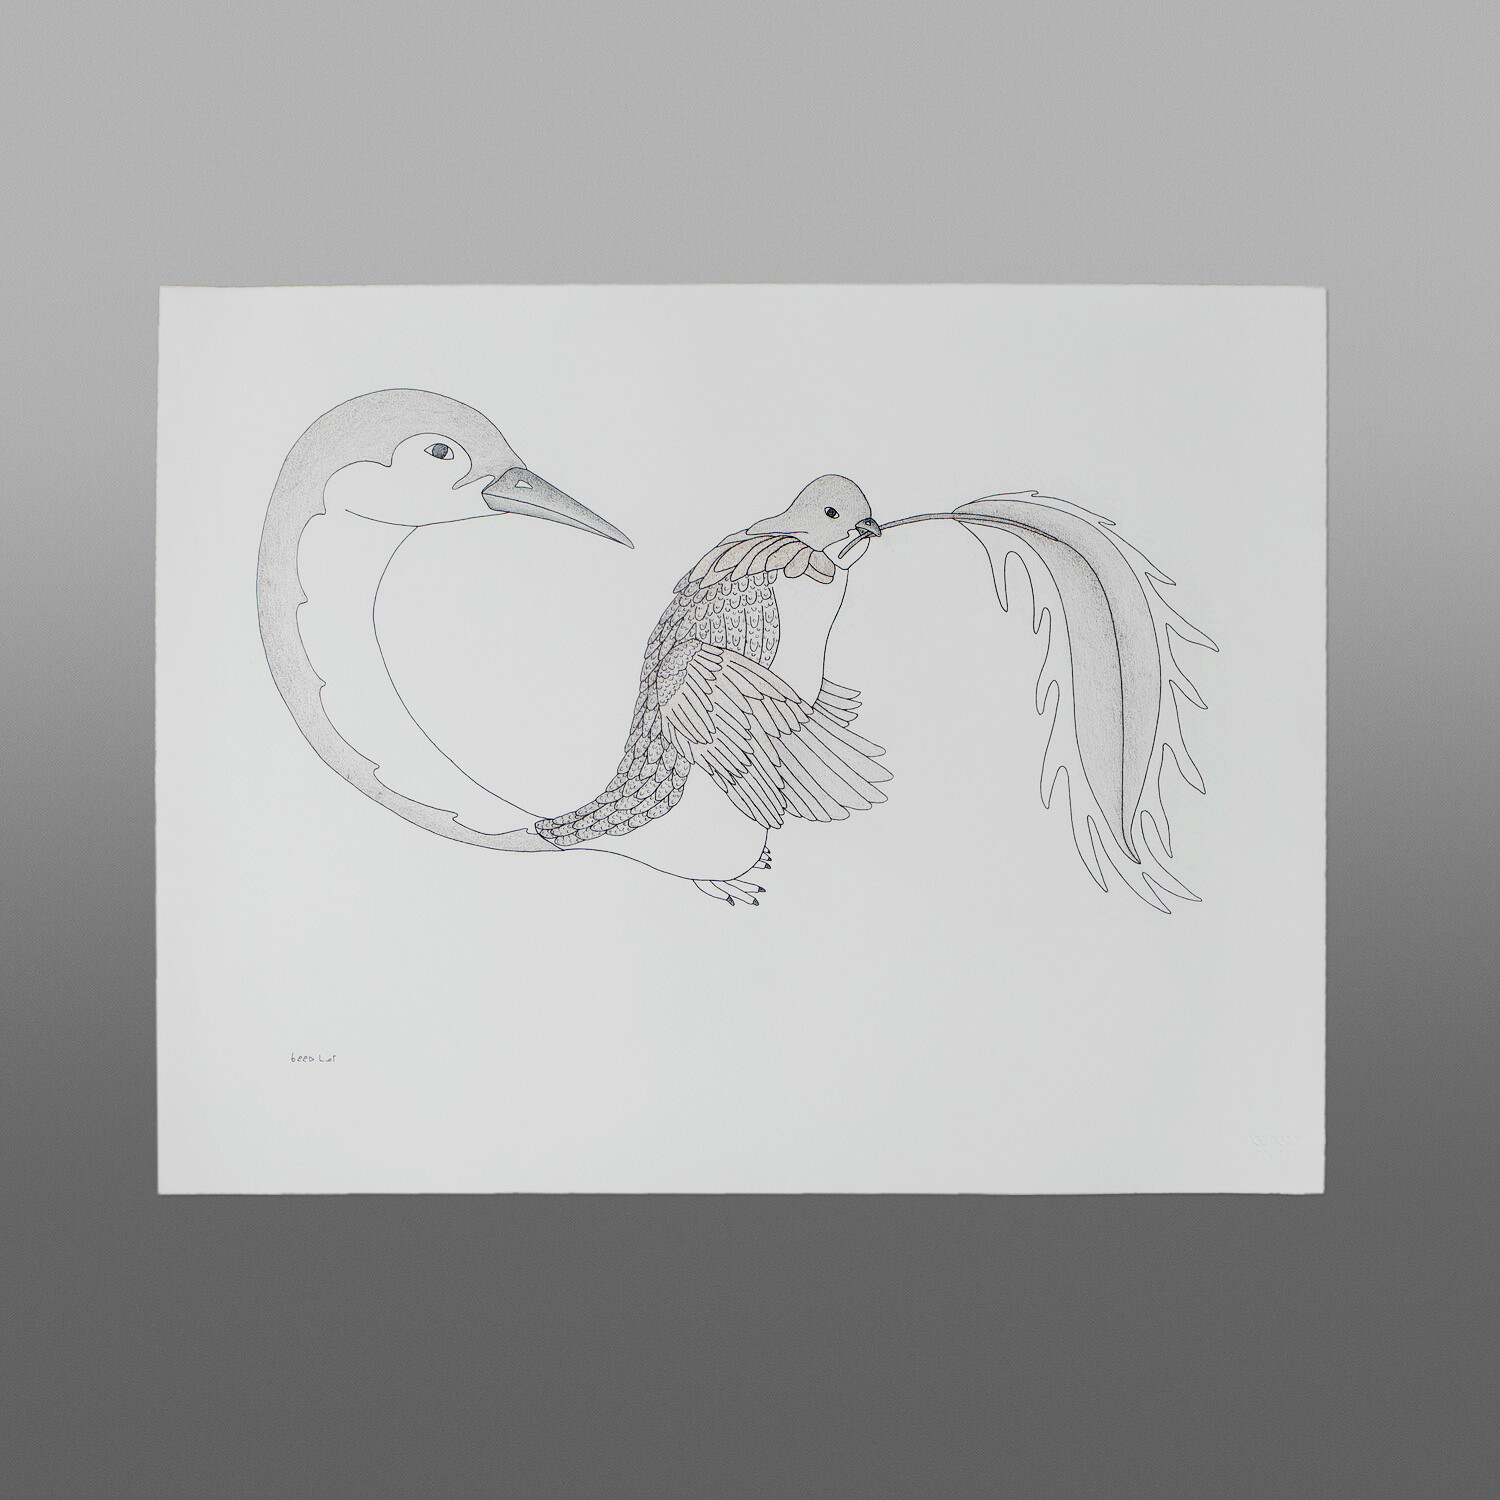 Bird Dreams
Qavavau Manumie
Inuit
Color pencil, ink
26" x 20"
$800
800 rt cad
072-1531 cons